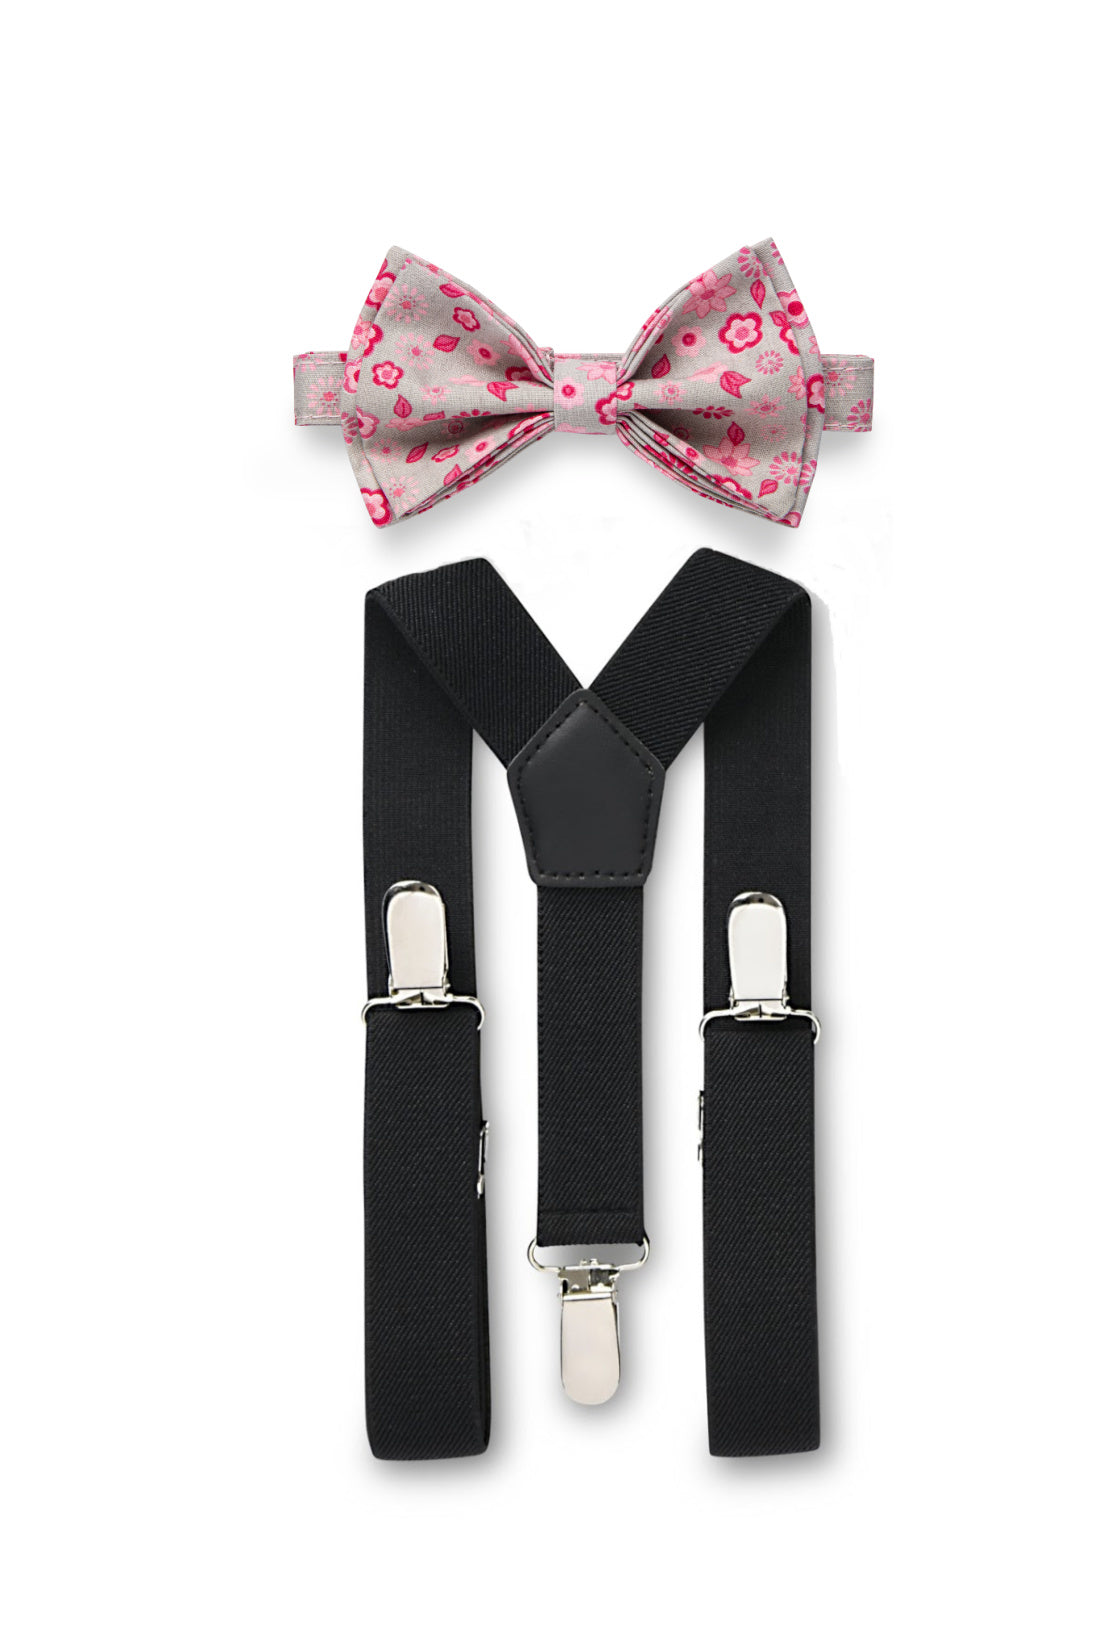 Black Suspenders & Grey Pink Floral Bow Tie